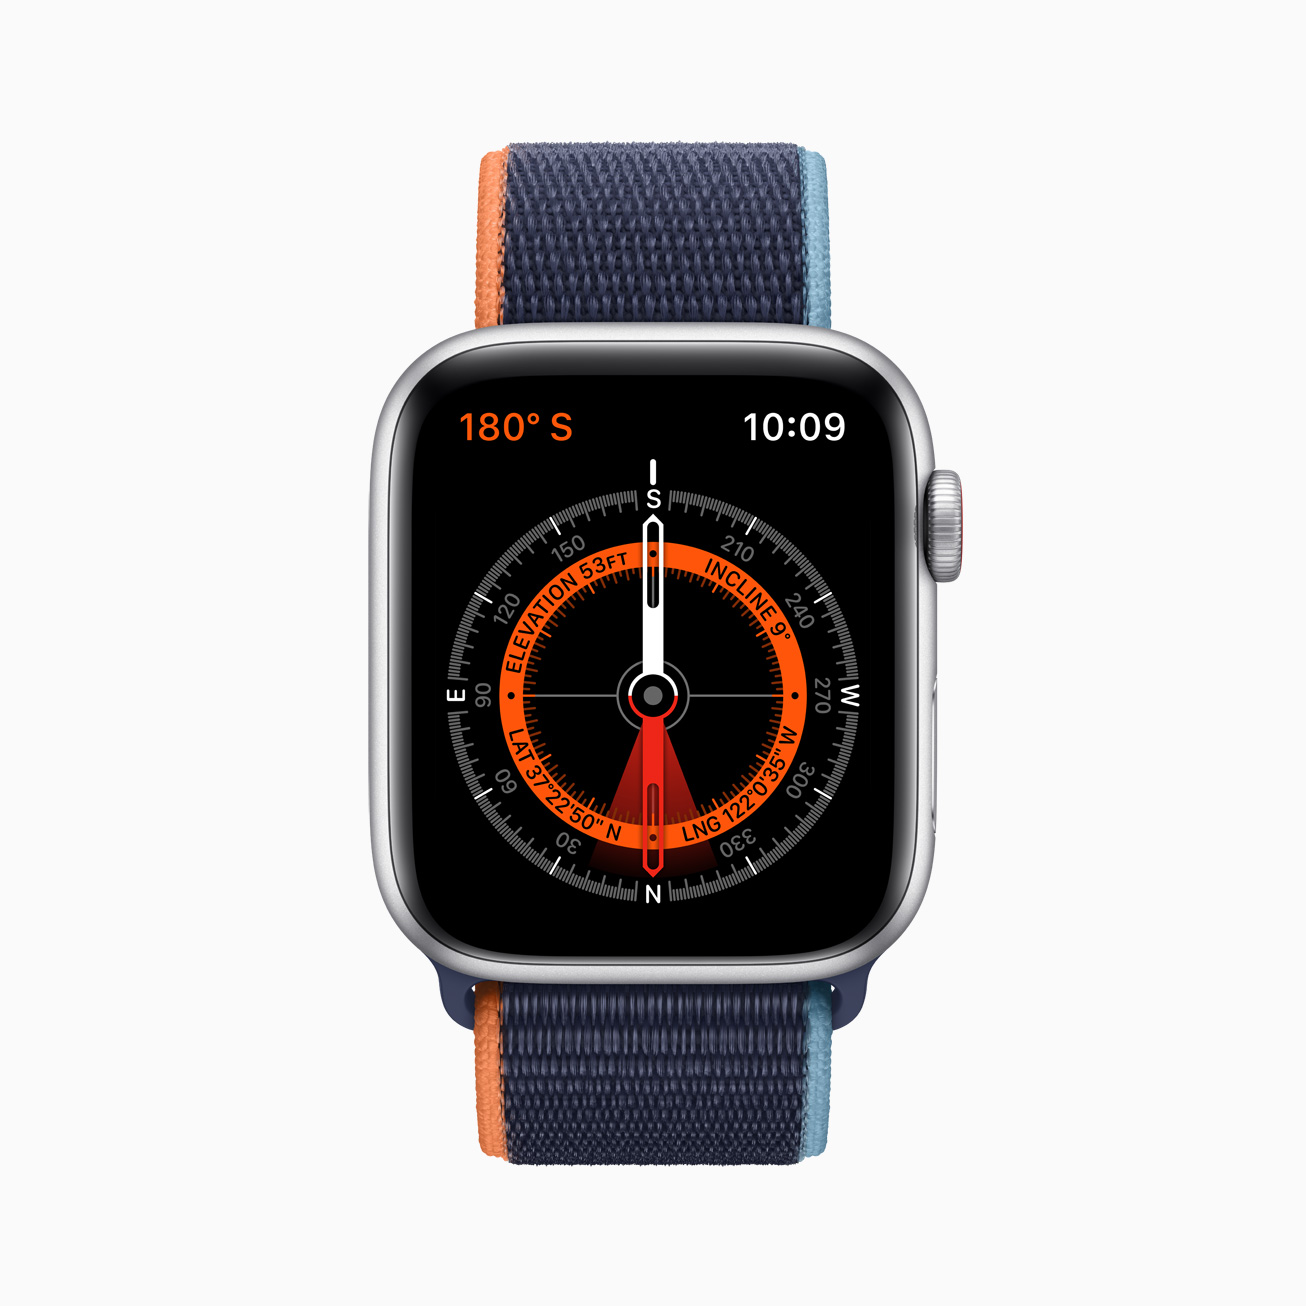 Apple watch se compass 09152020